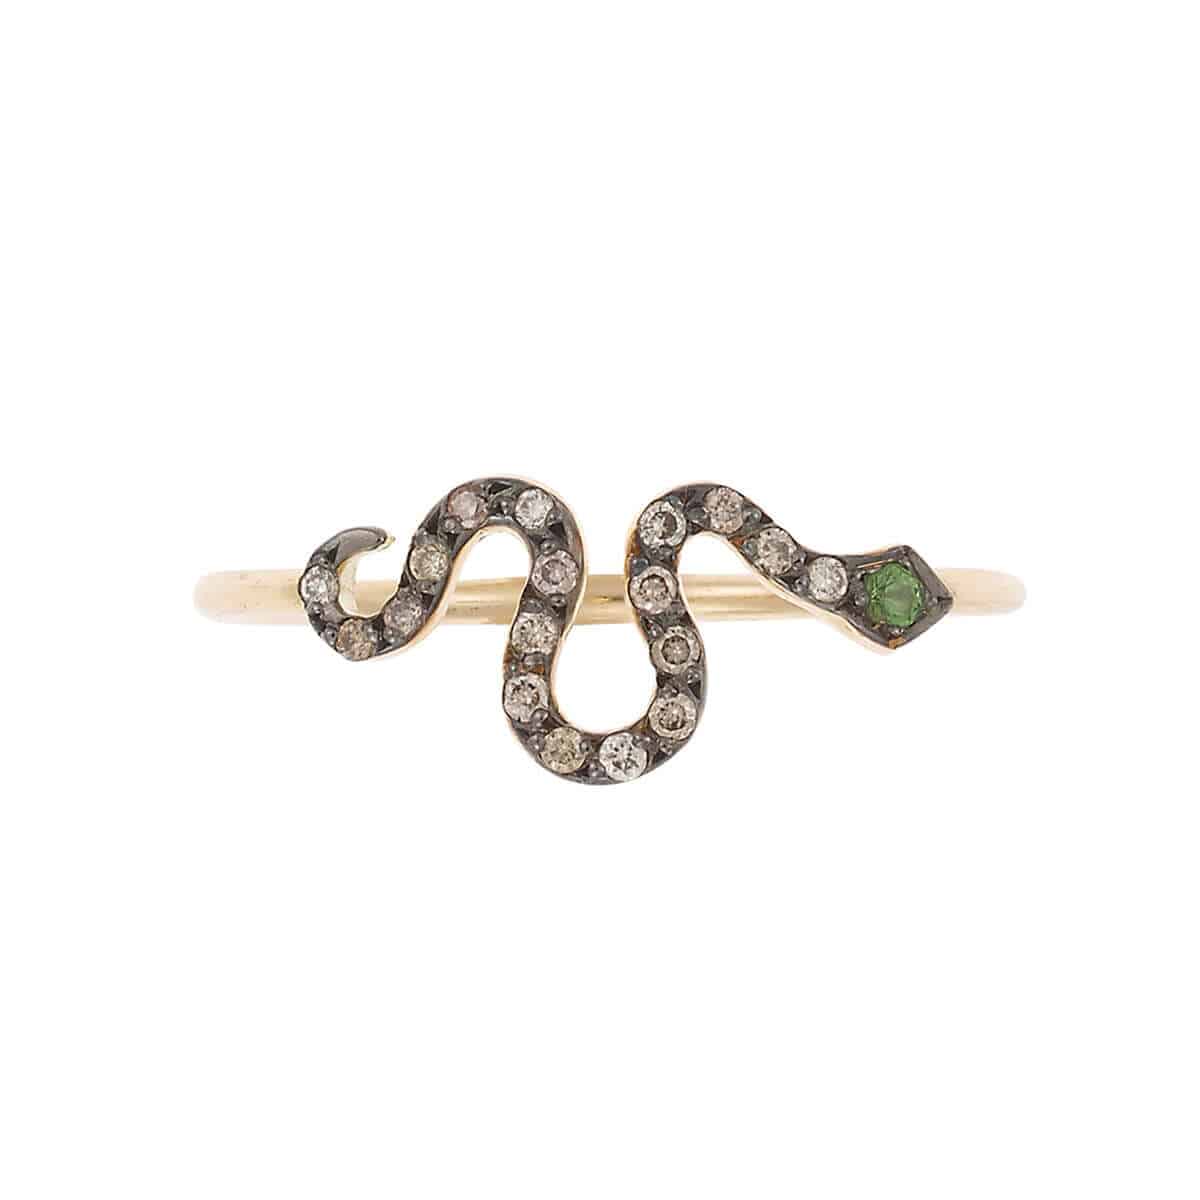 Mini Snake Ring R-Oxs-Chd-Ts - SNAKES - Ileana Makri store